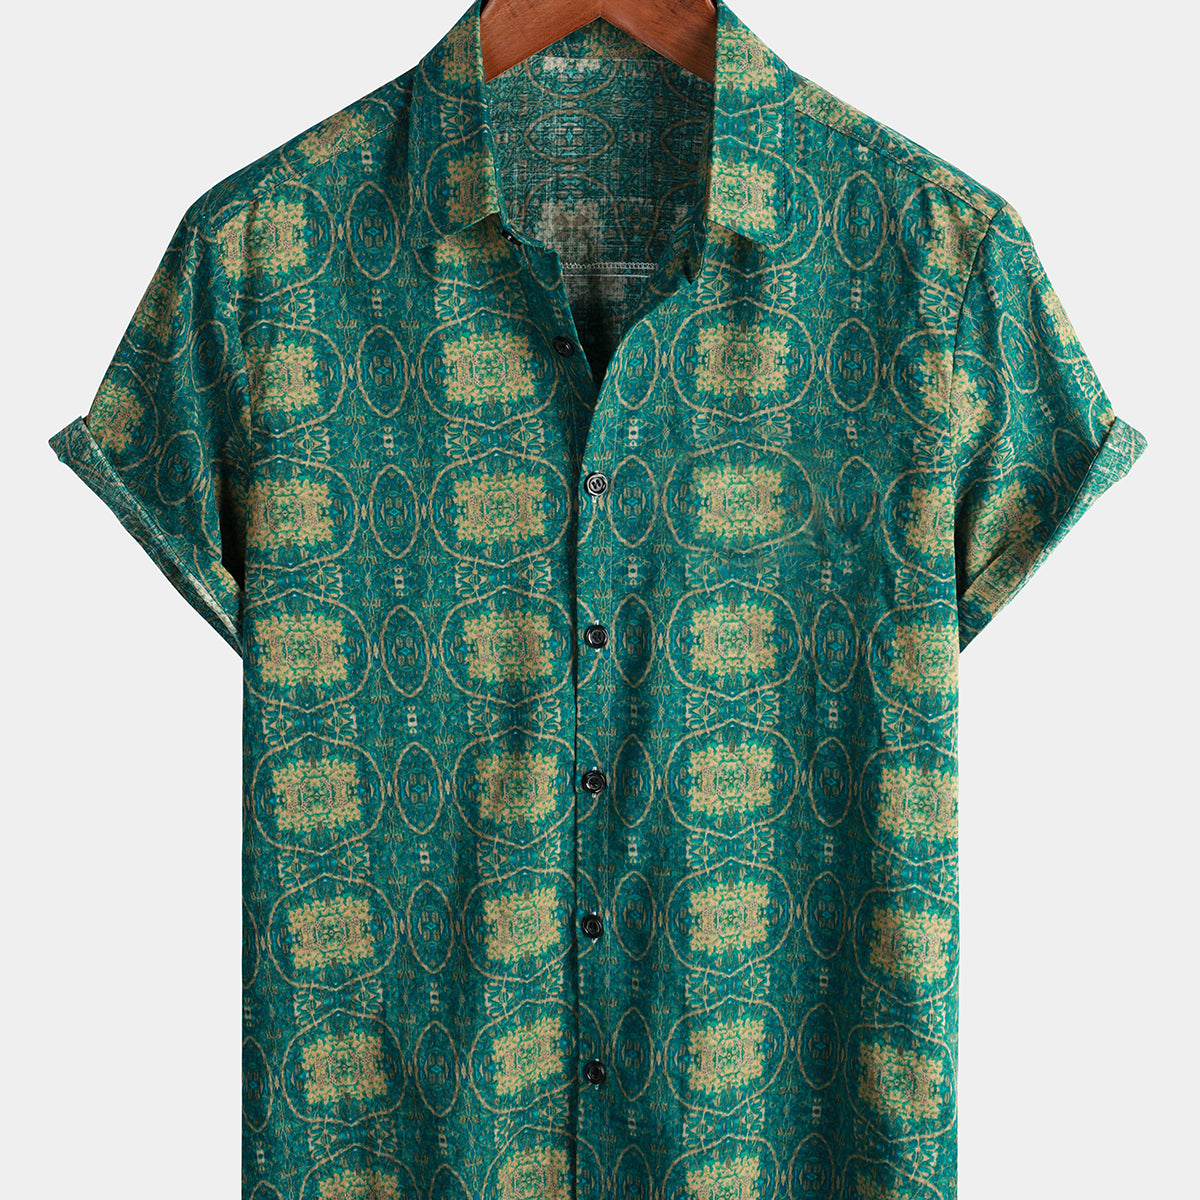 Men's Casual Green Striped Cotton Vintage Short Sleeve 70s Retro Summer Button Up Shirt